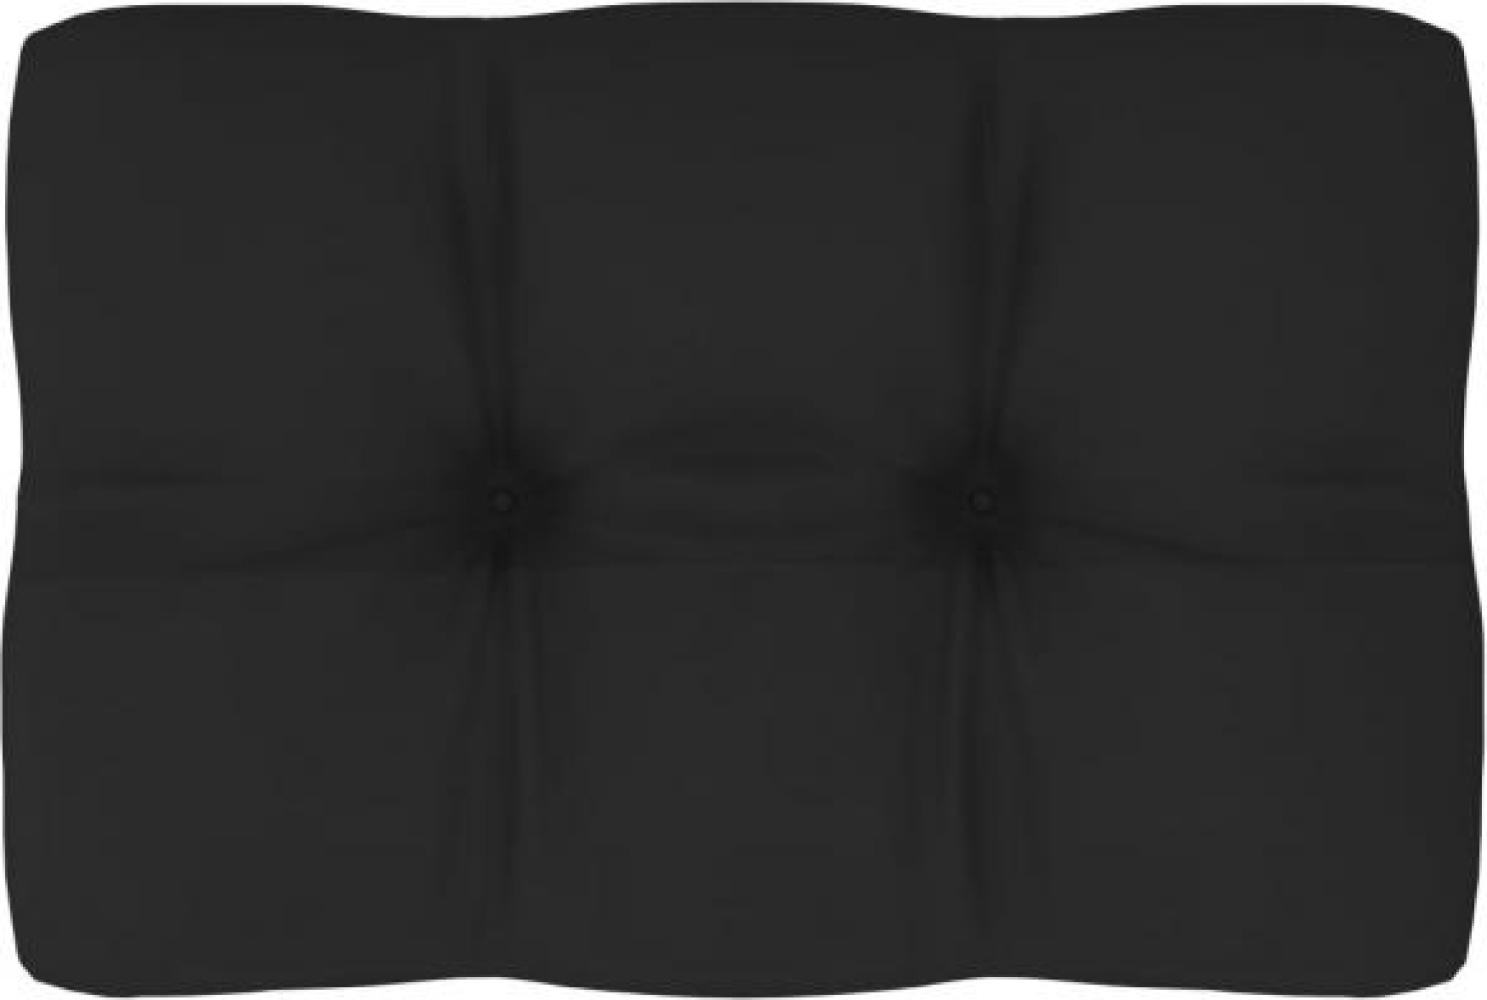 Palettensofa-Kissen Schwarz 60x40x10 cm Bild 1